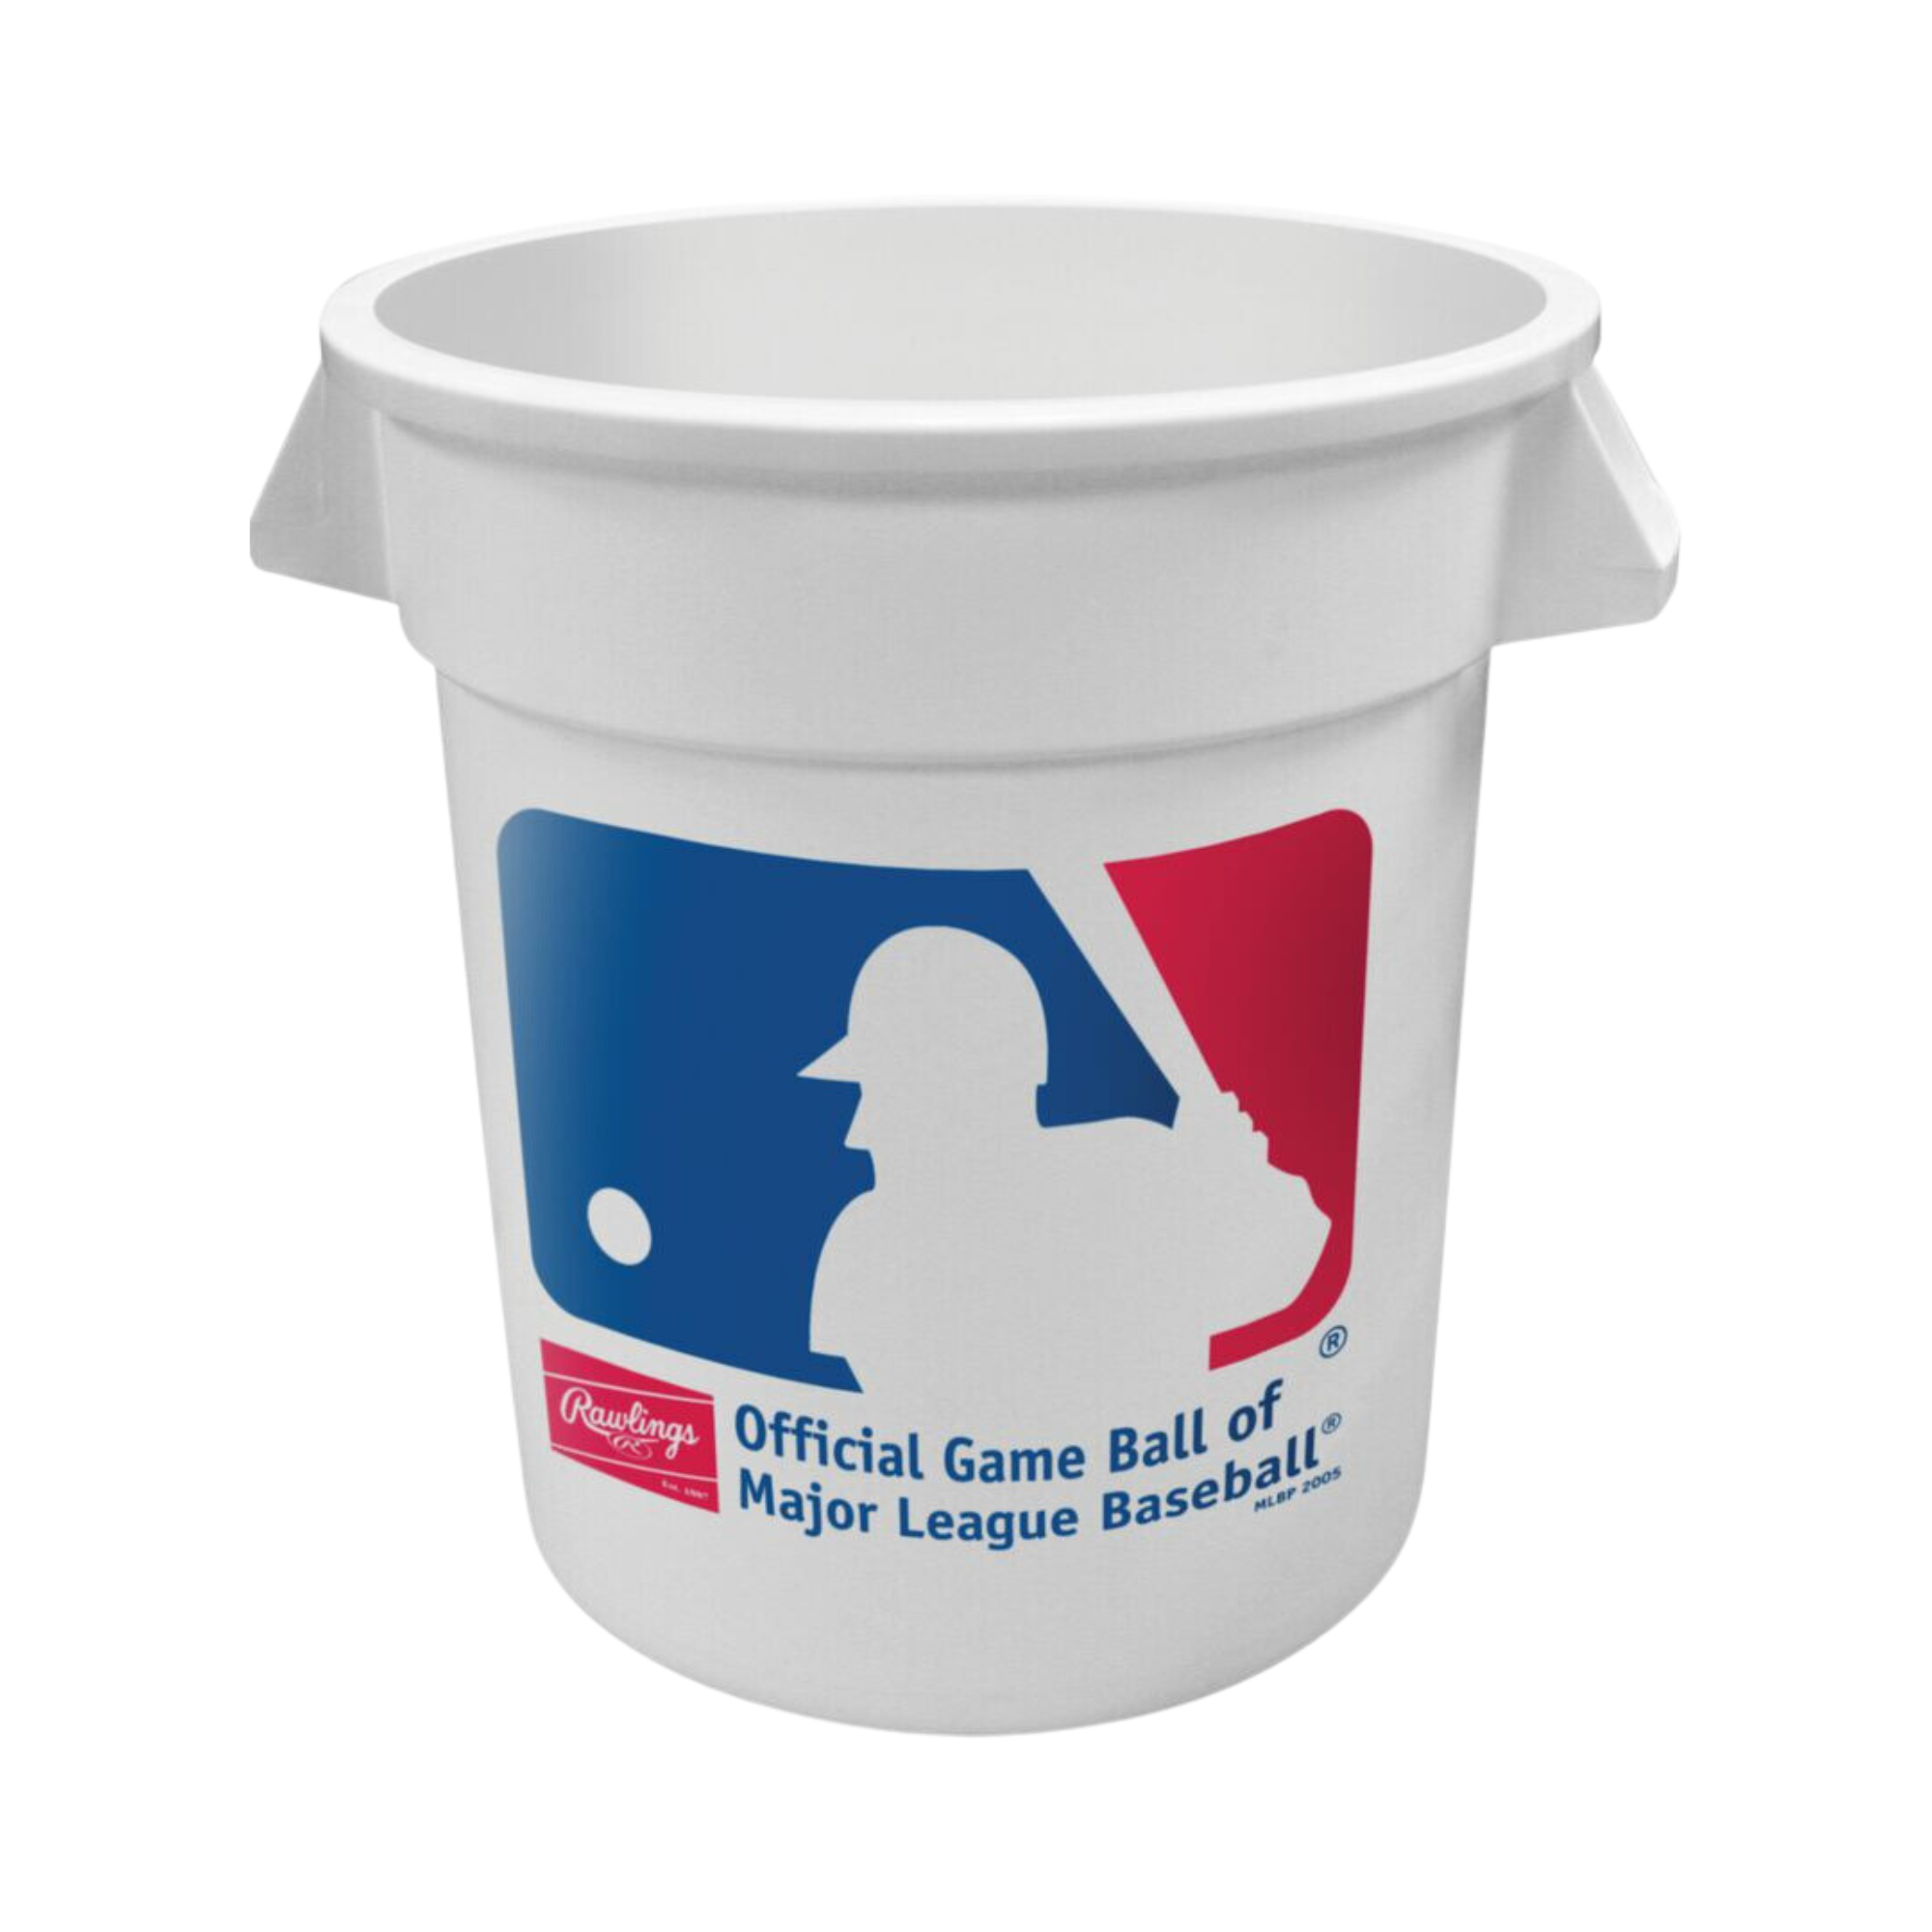 Perfect Game Baseball/Softball 5 Gallon White Baseball Bucket